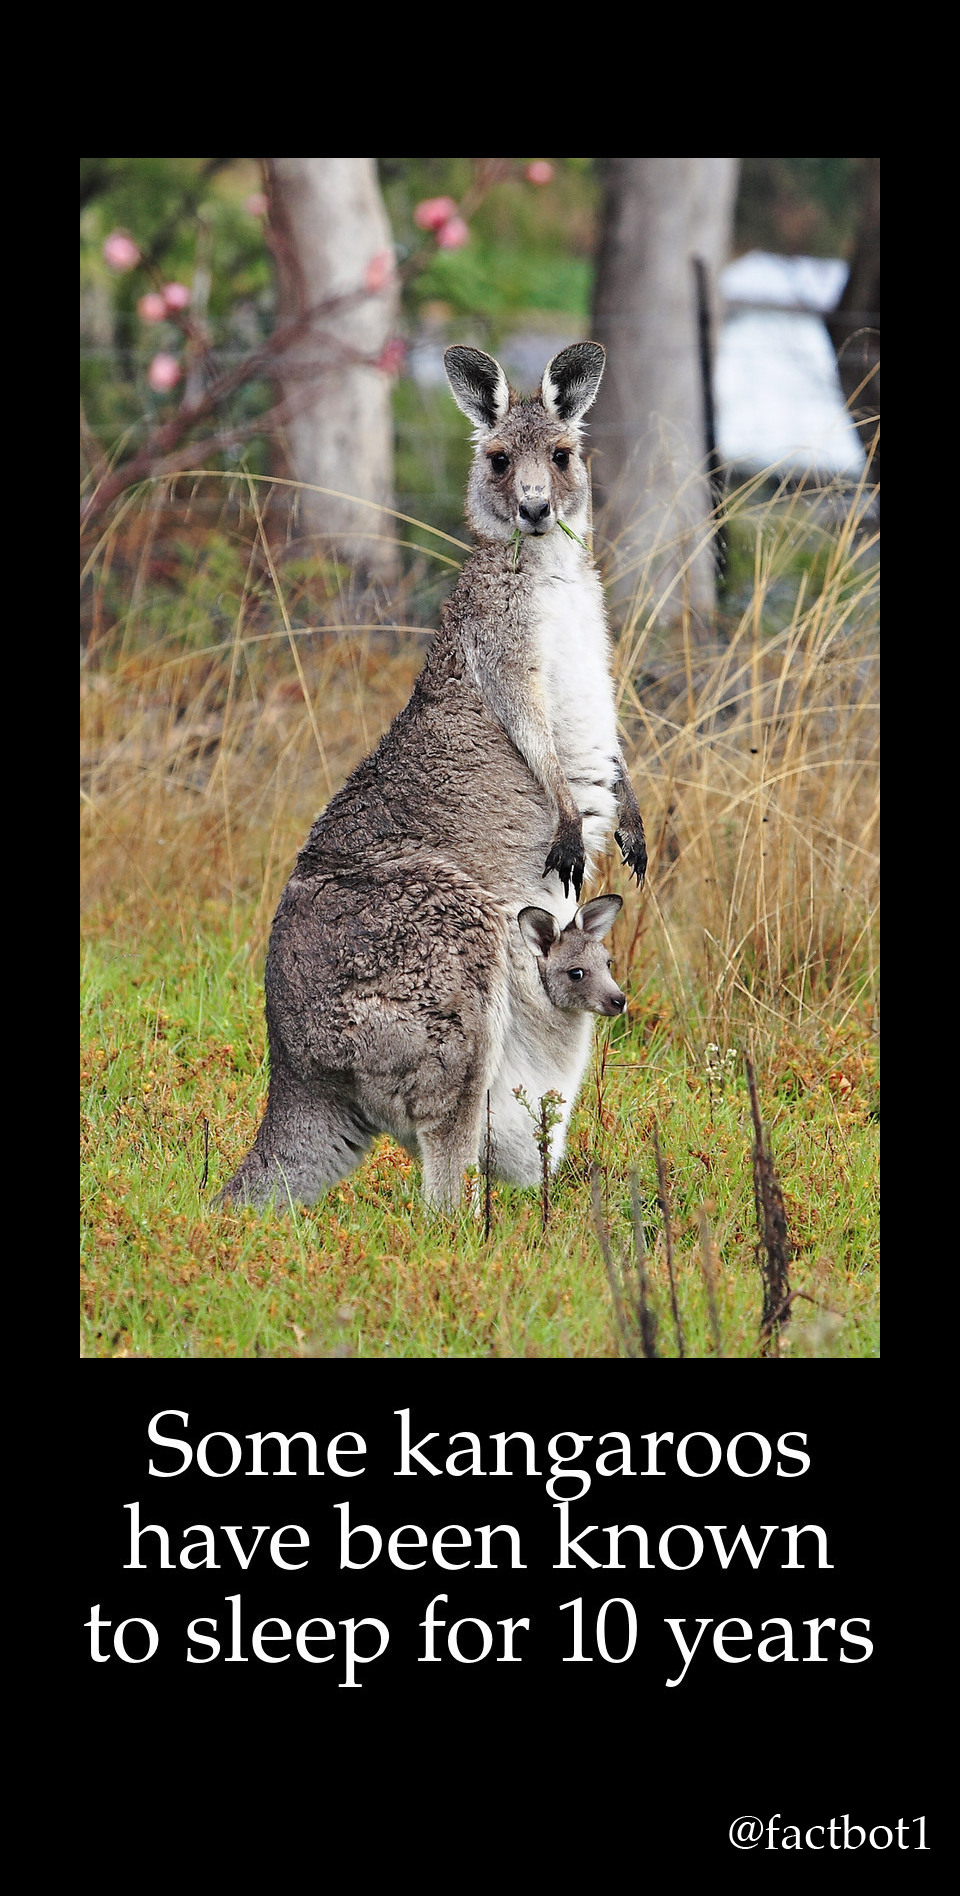 eastern grey kangaroo - Some kangaroos have been known to sleep for 10 years